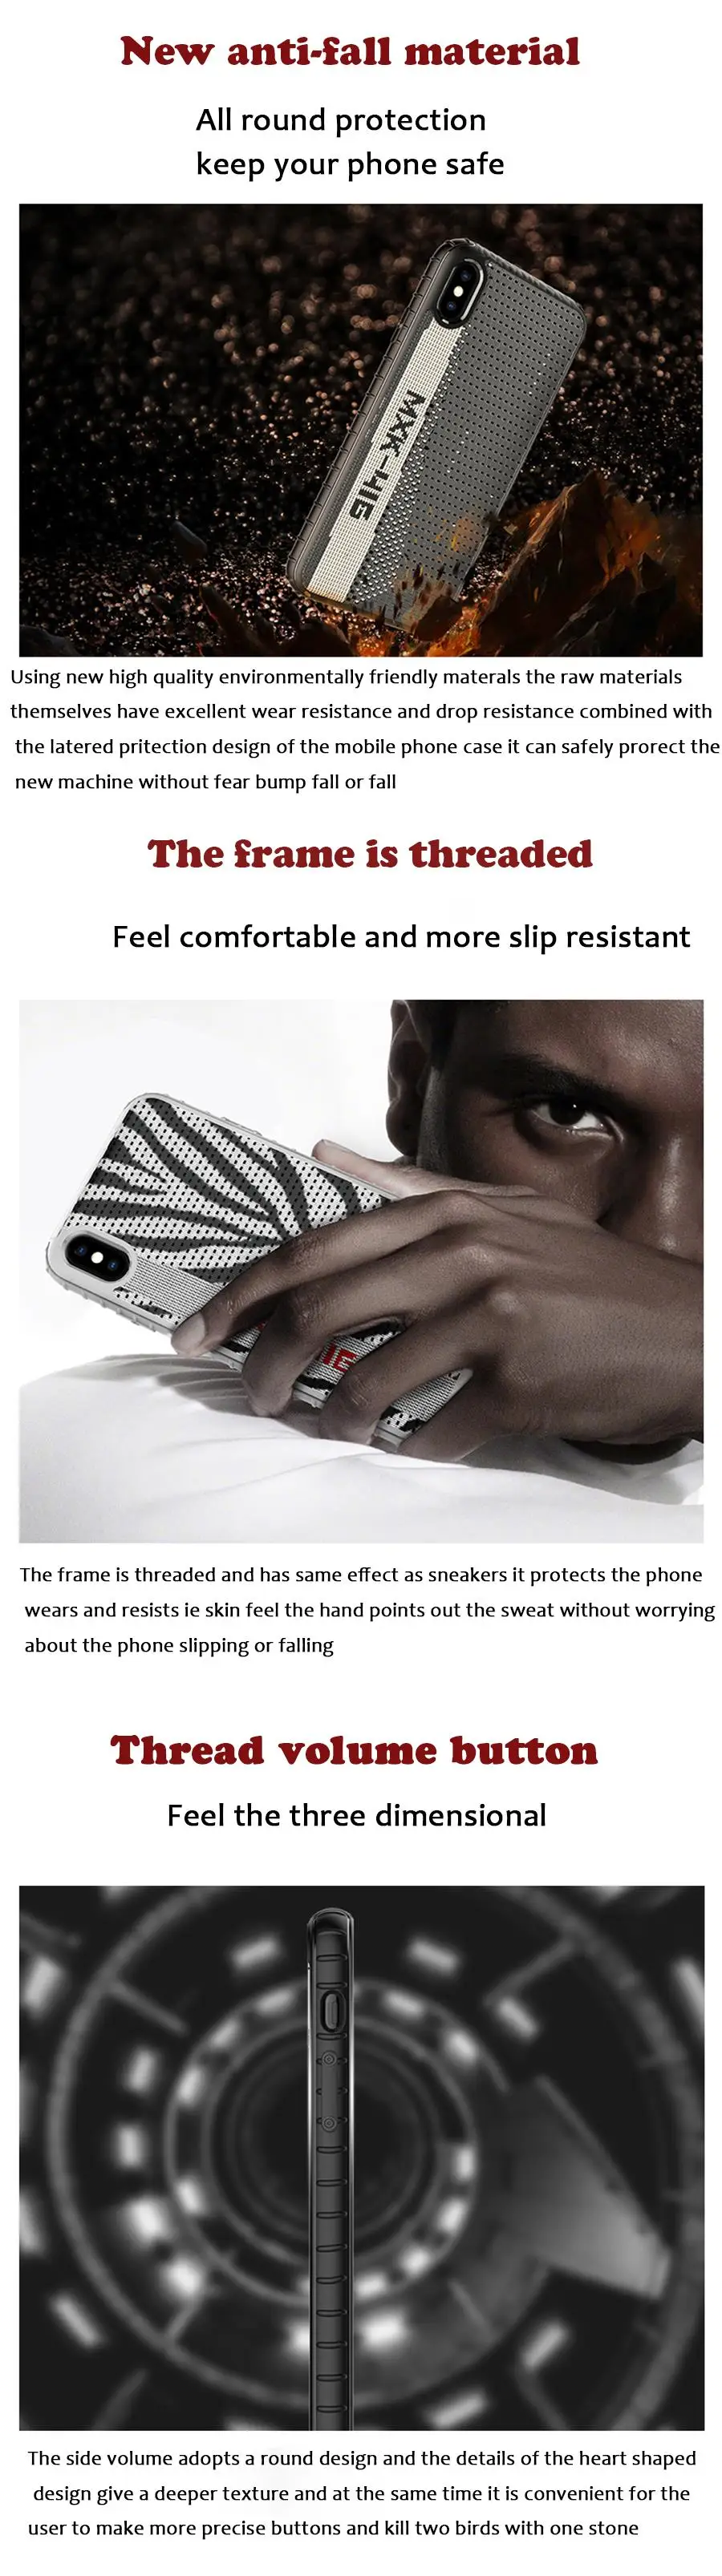 Global Luxury Kanye West BOOST 350 V2 силиконовый чехол для iphone 11 Pro X XS Max Xr 7 8 6 6s Plus уличный тренд чехол для телефона